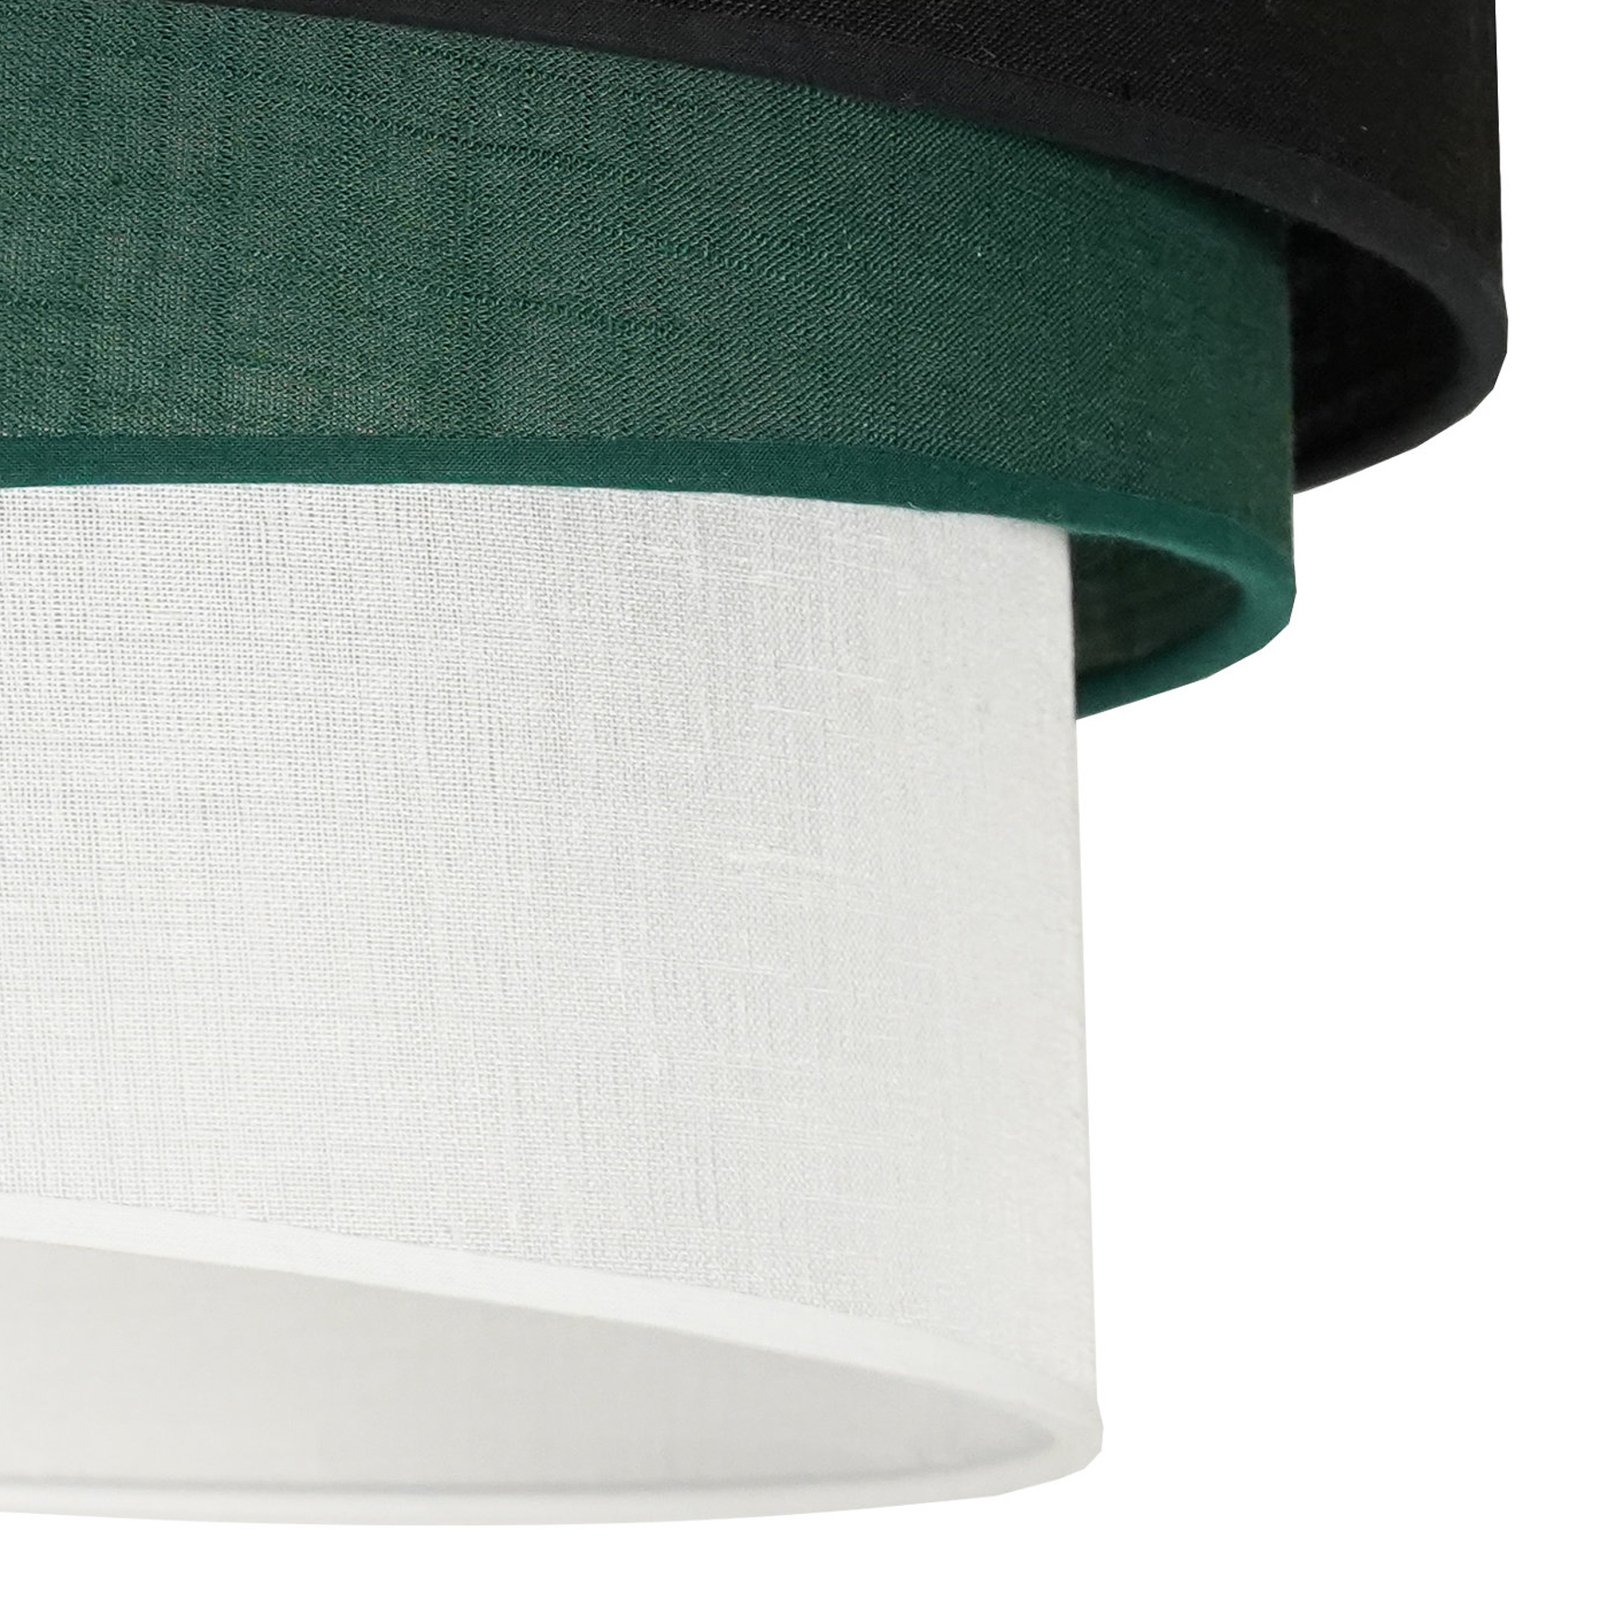 Euluna pendant light Trio, black/green/white, textile, Ø 45 cm